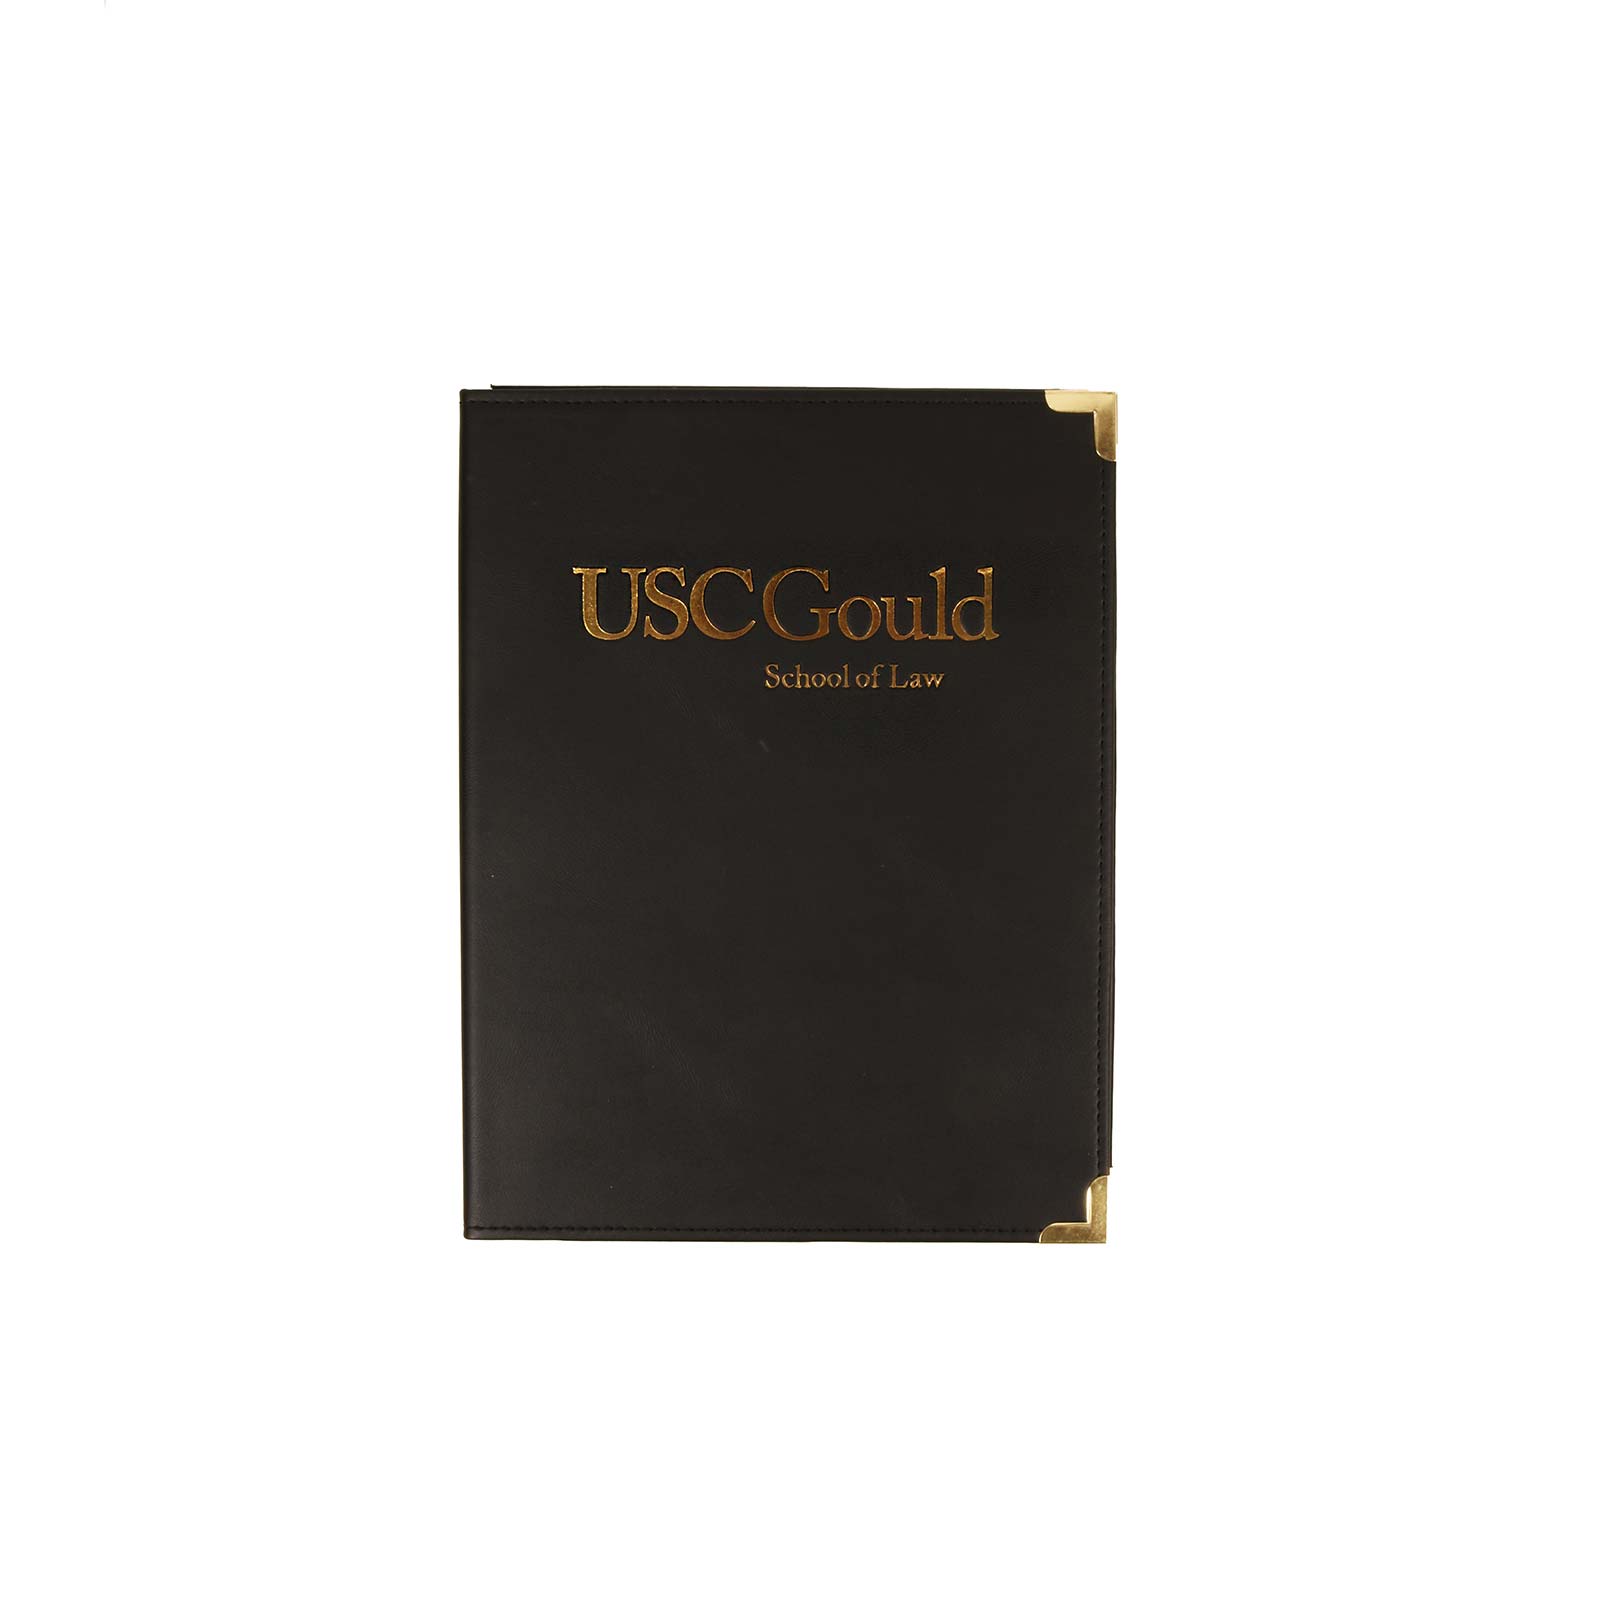 USC Gould School of Law Padfolio image01